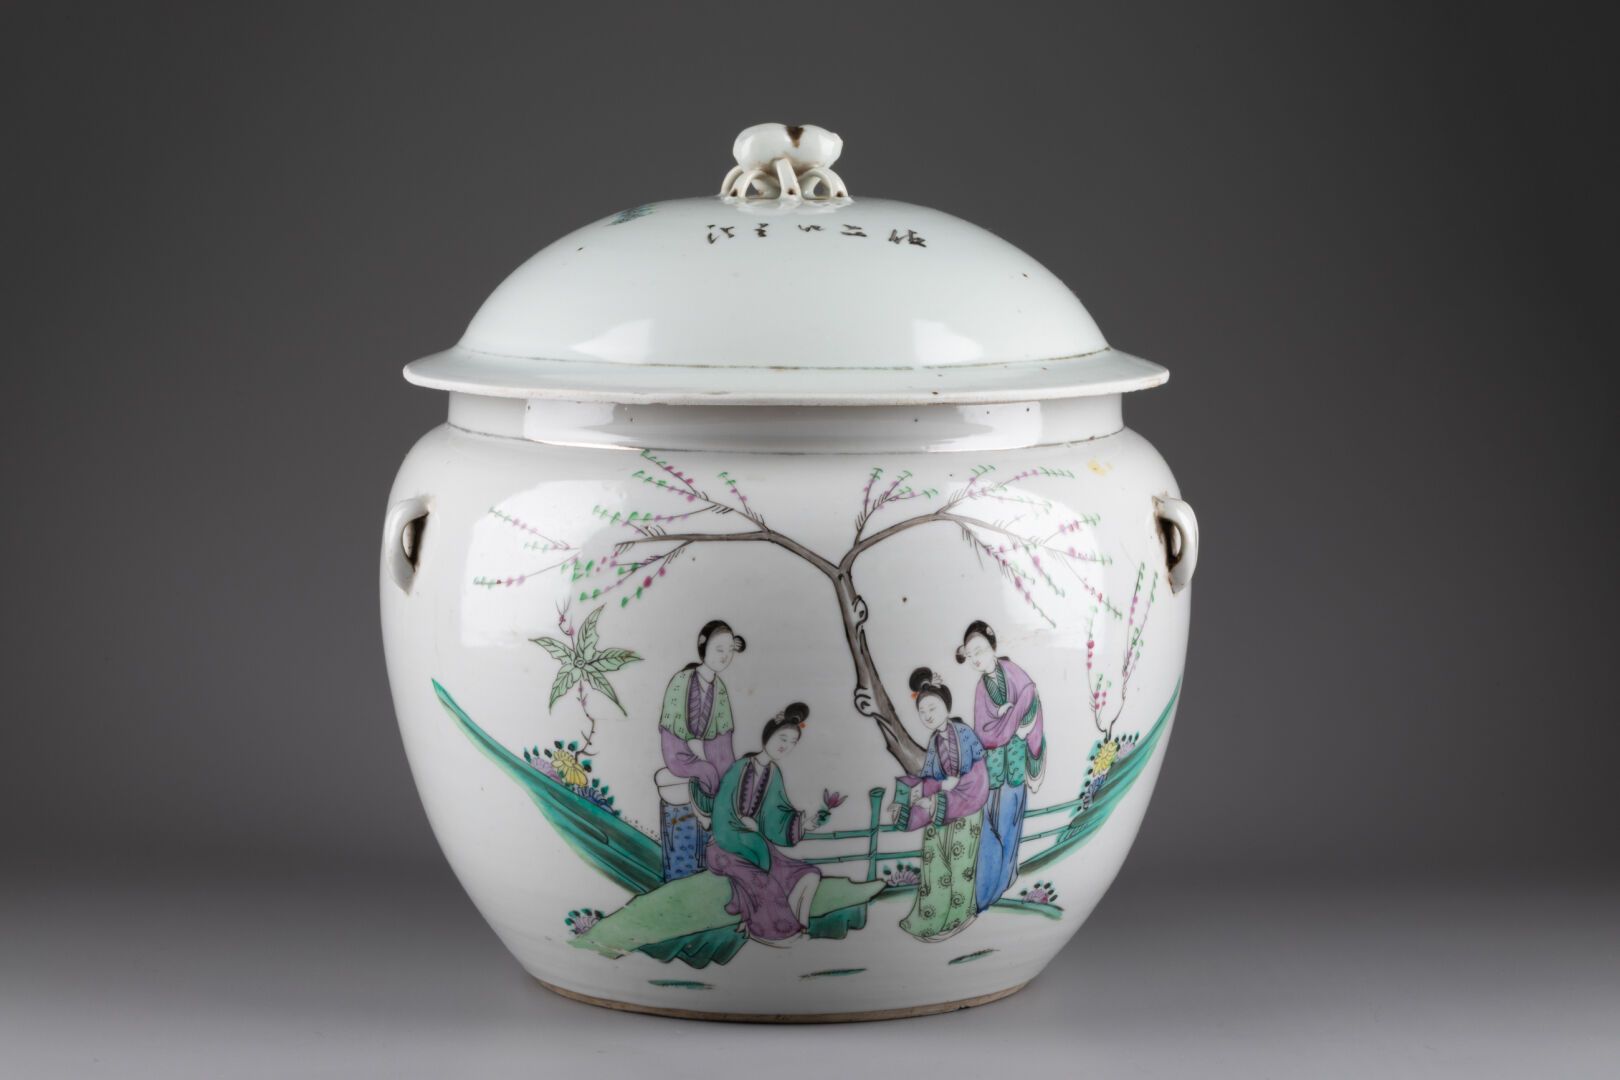 CHINE - Vers 1900 花园里装饰着宫廷女郎的有盖POT 
瓷器和多色珐琅彩 
H.22 cm - W. 24 cm